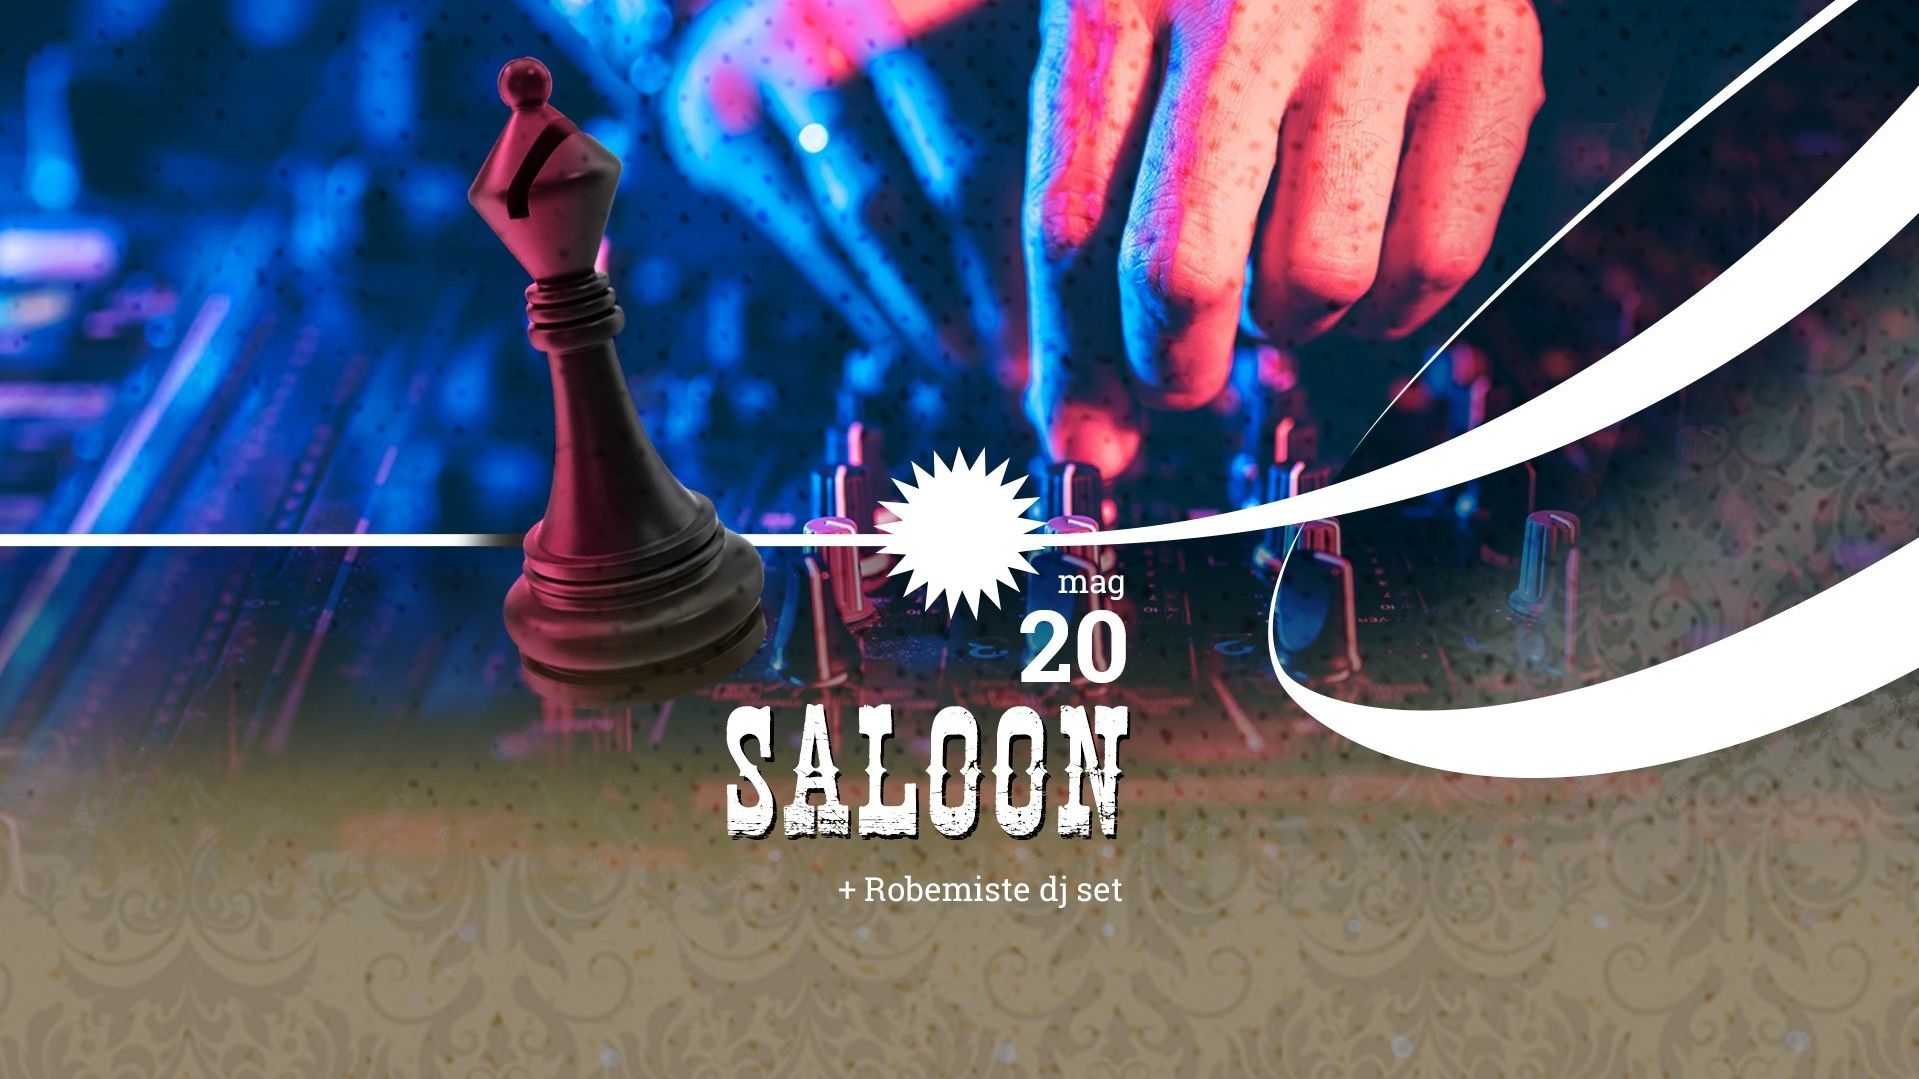 Mercato Saloon | torneo di scacchi + Robemiste dj set